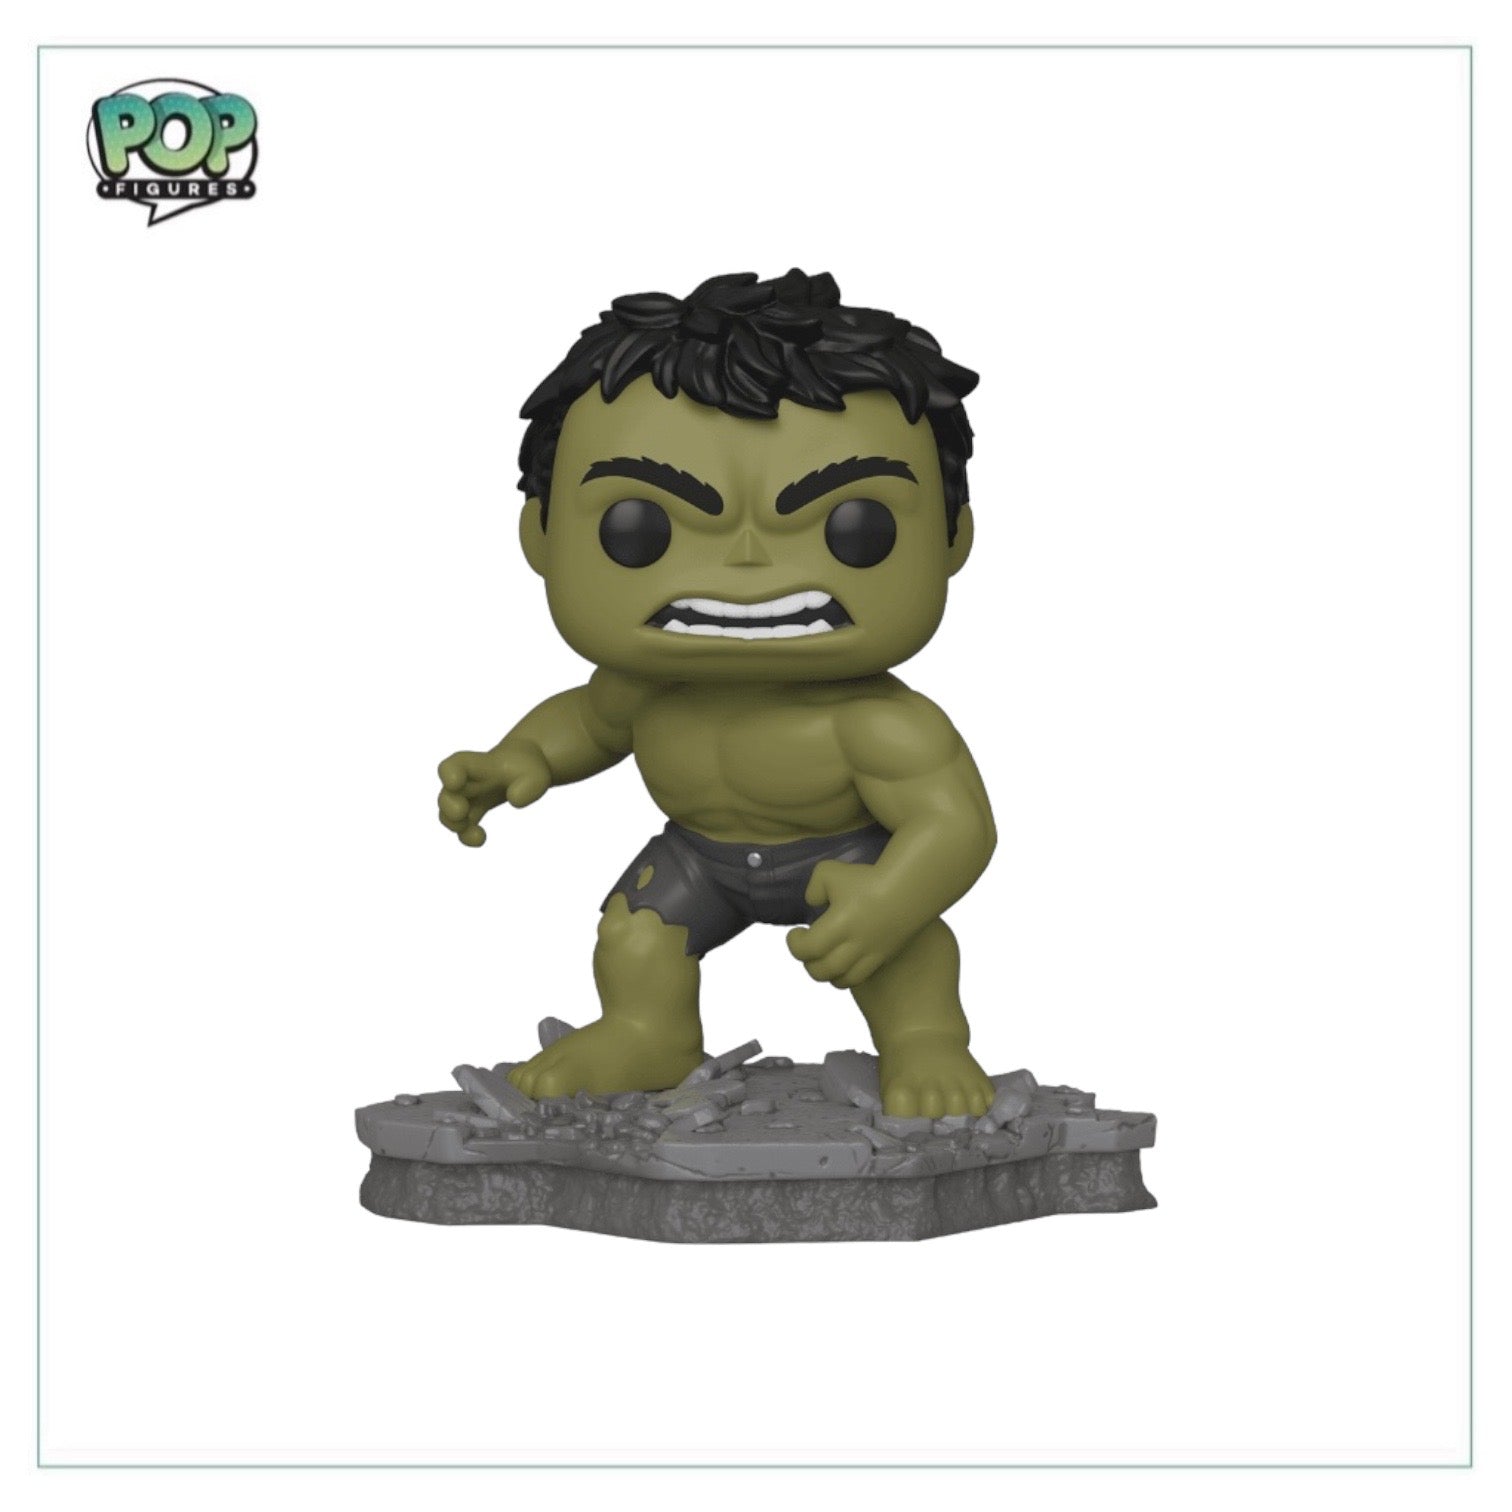 Avengers Assemble: Hulk #585 Deluxe Funko Pop! - The Avengers - Amazon Exclusive